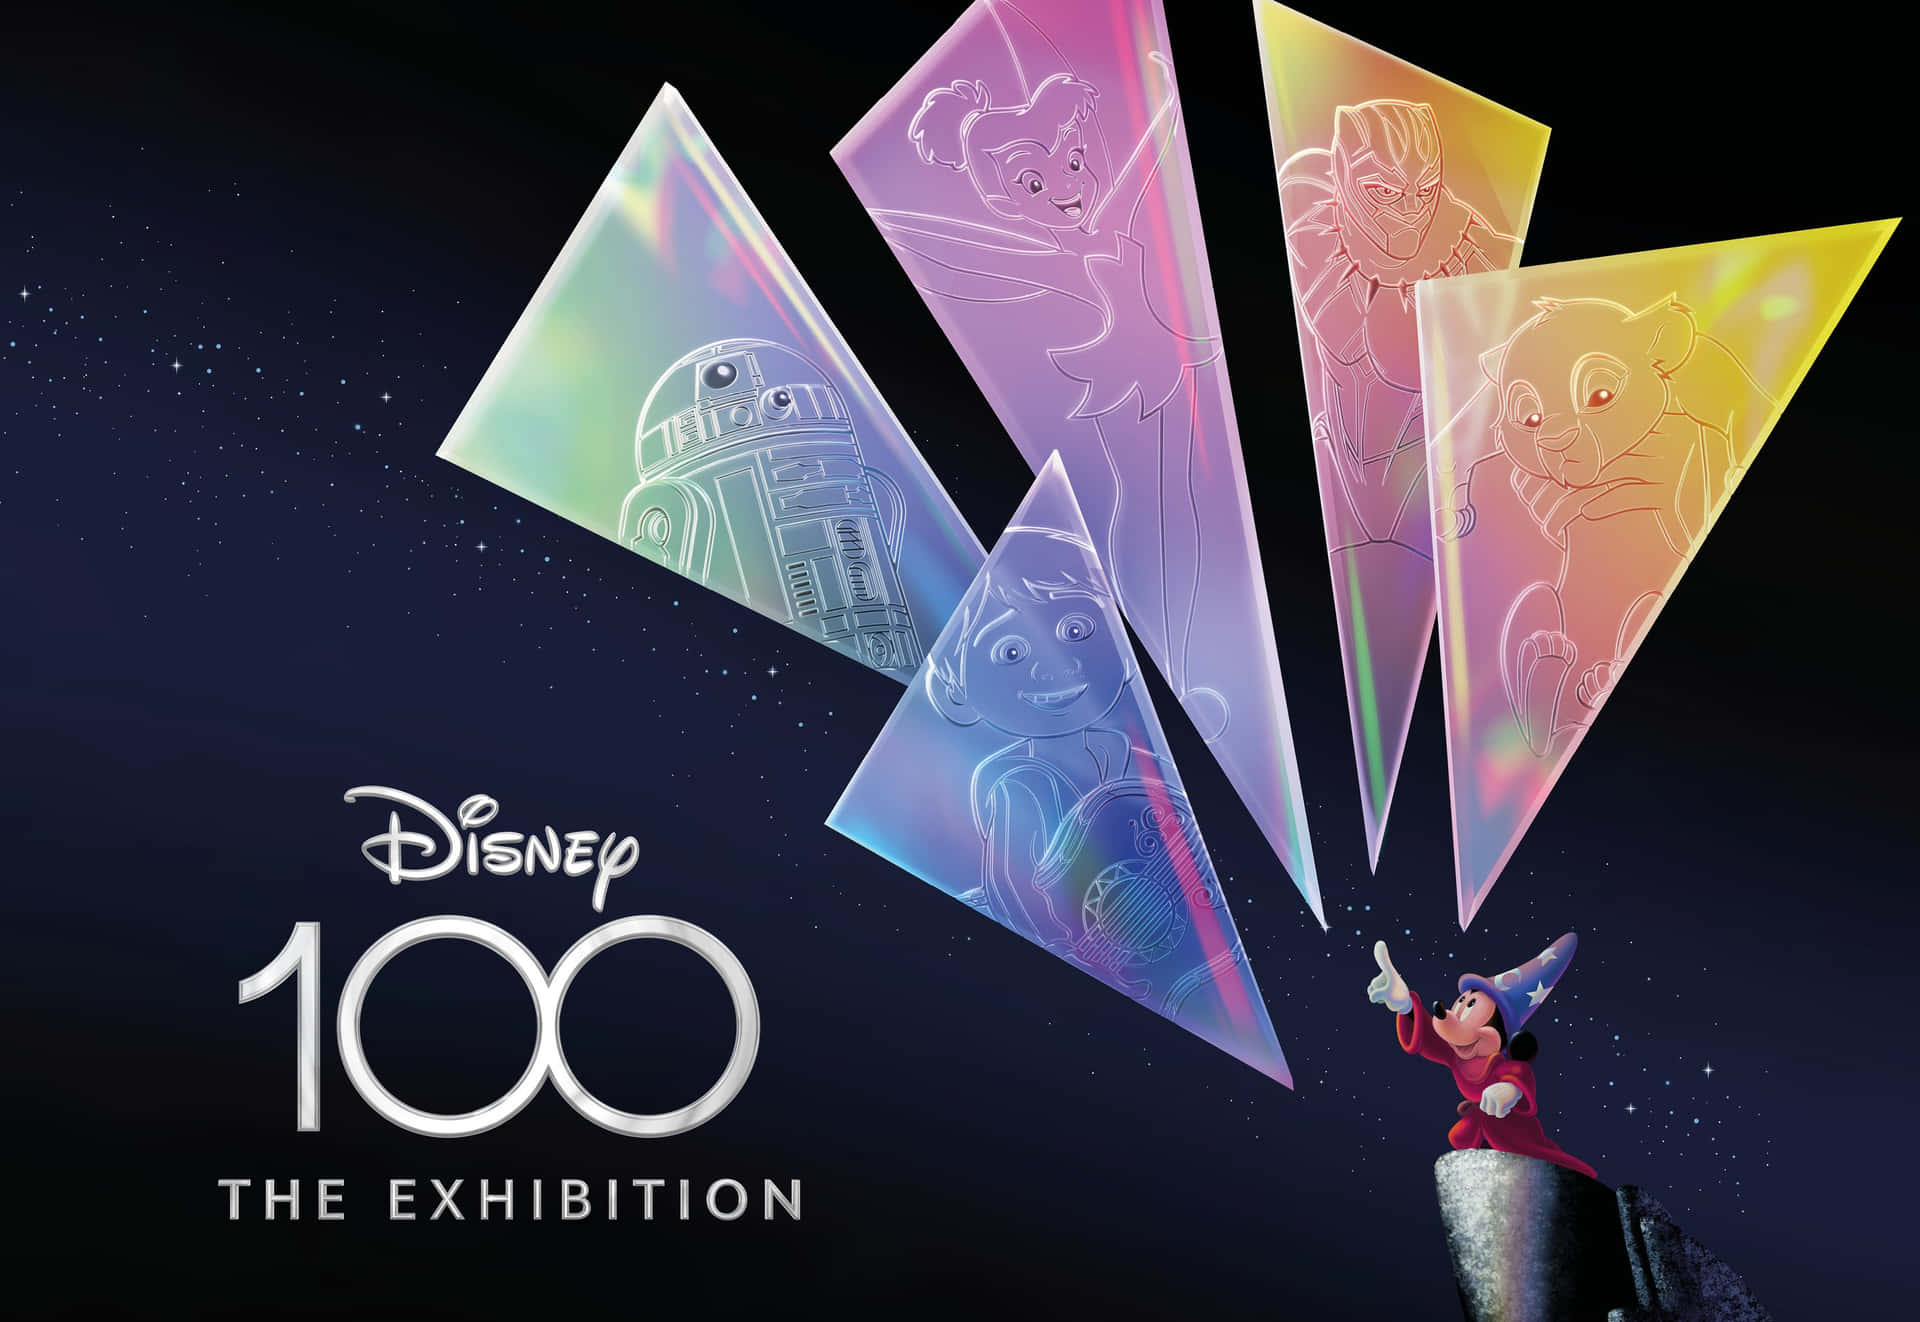 Disney100 The Exhibition Promotional Artwork Wallpaper